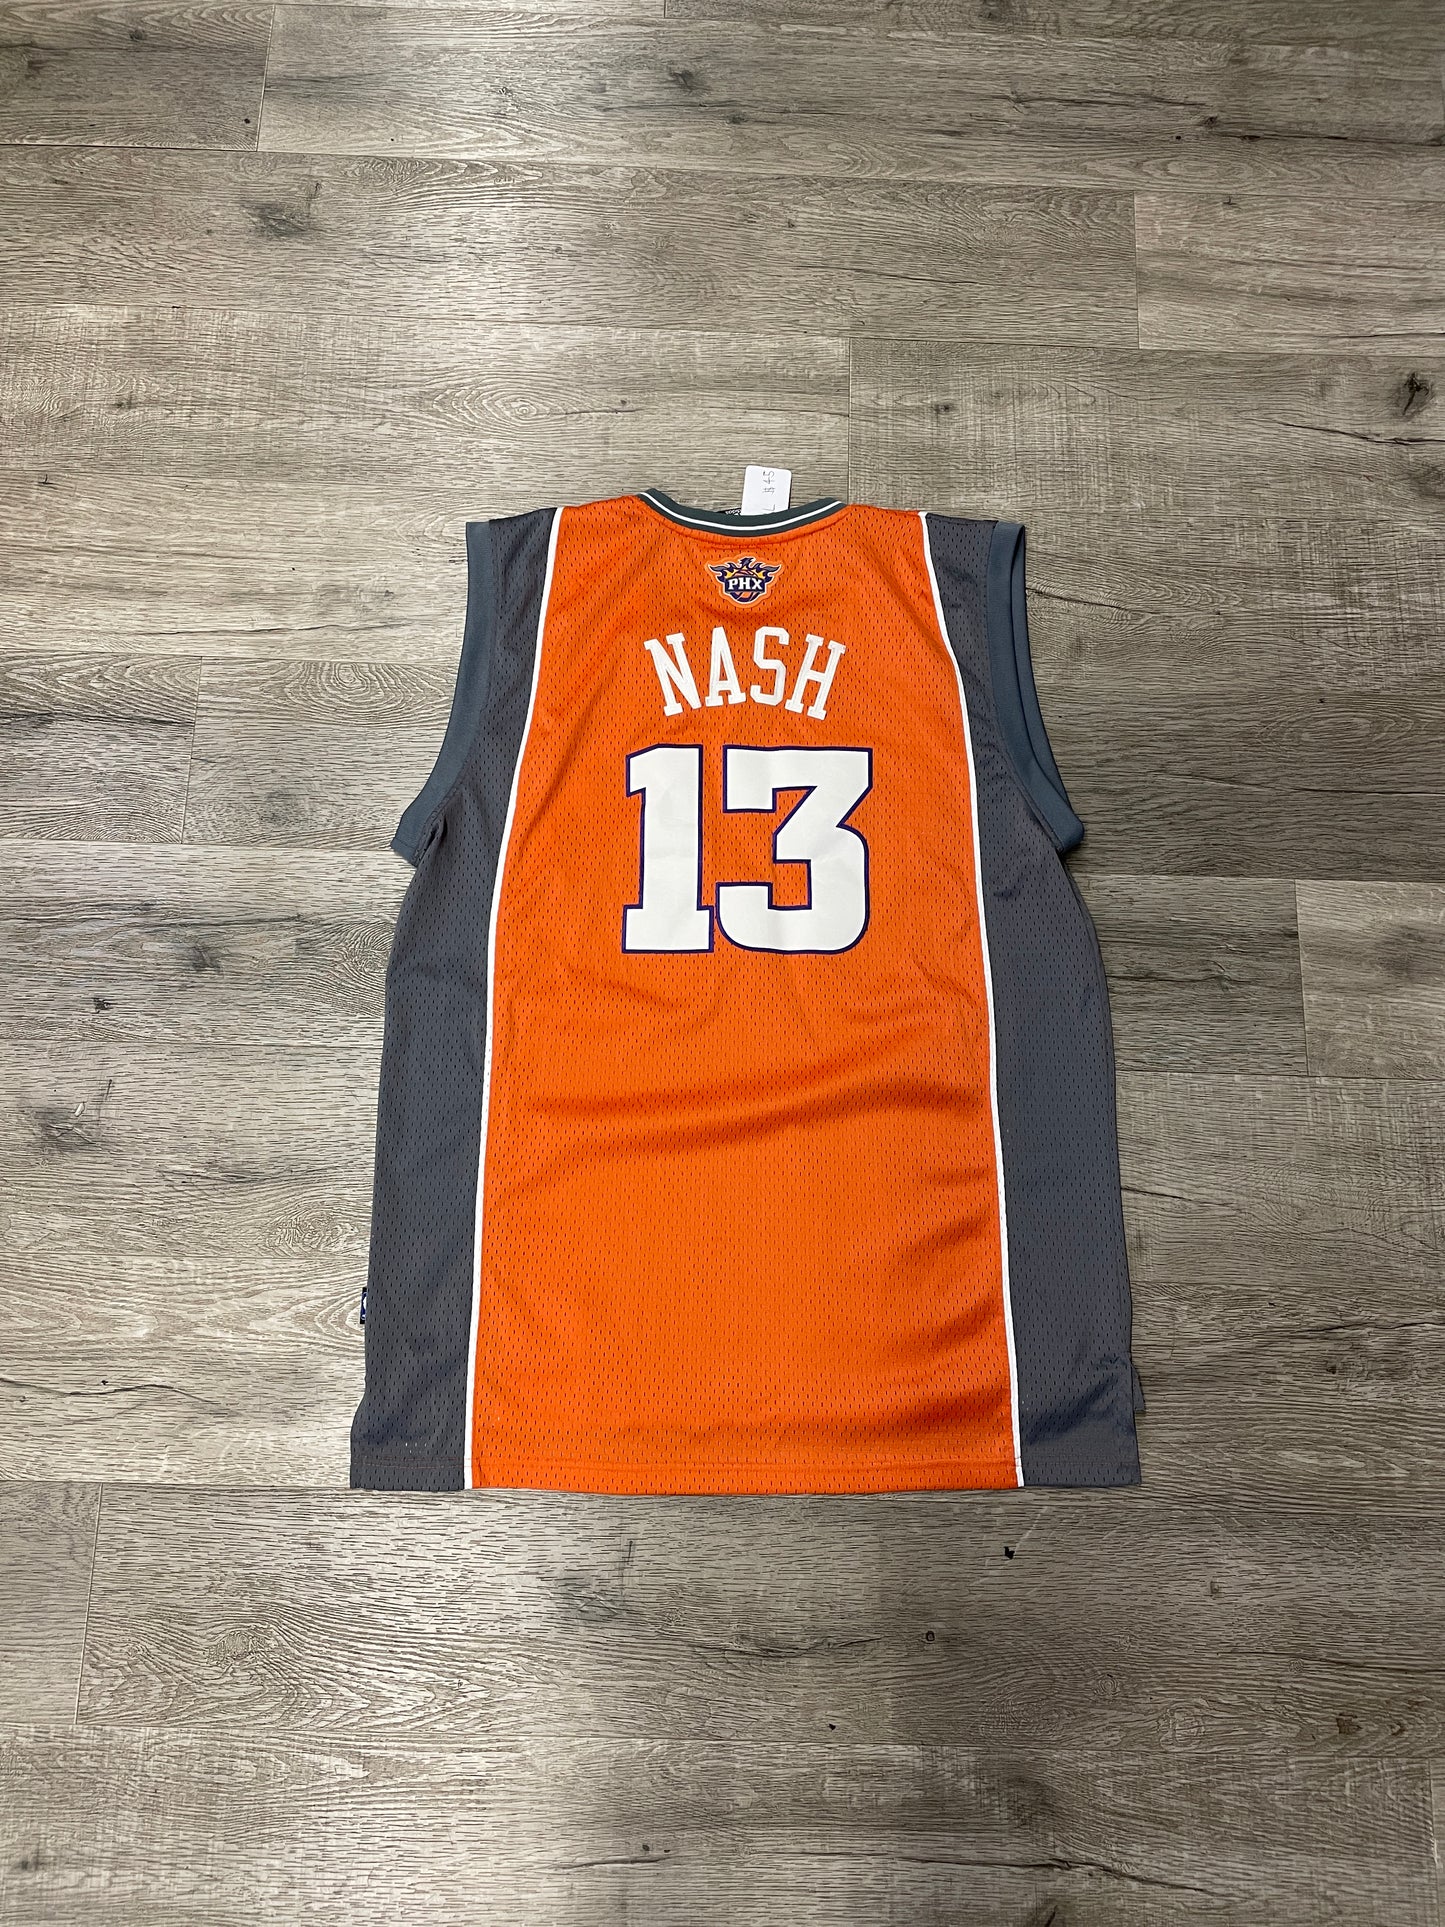 Steve Nash Adidas Suns Jersey